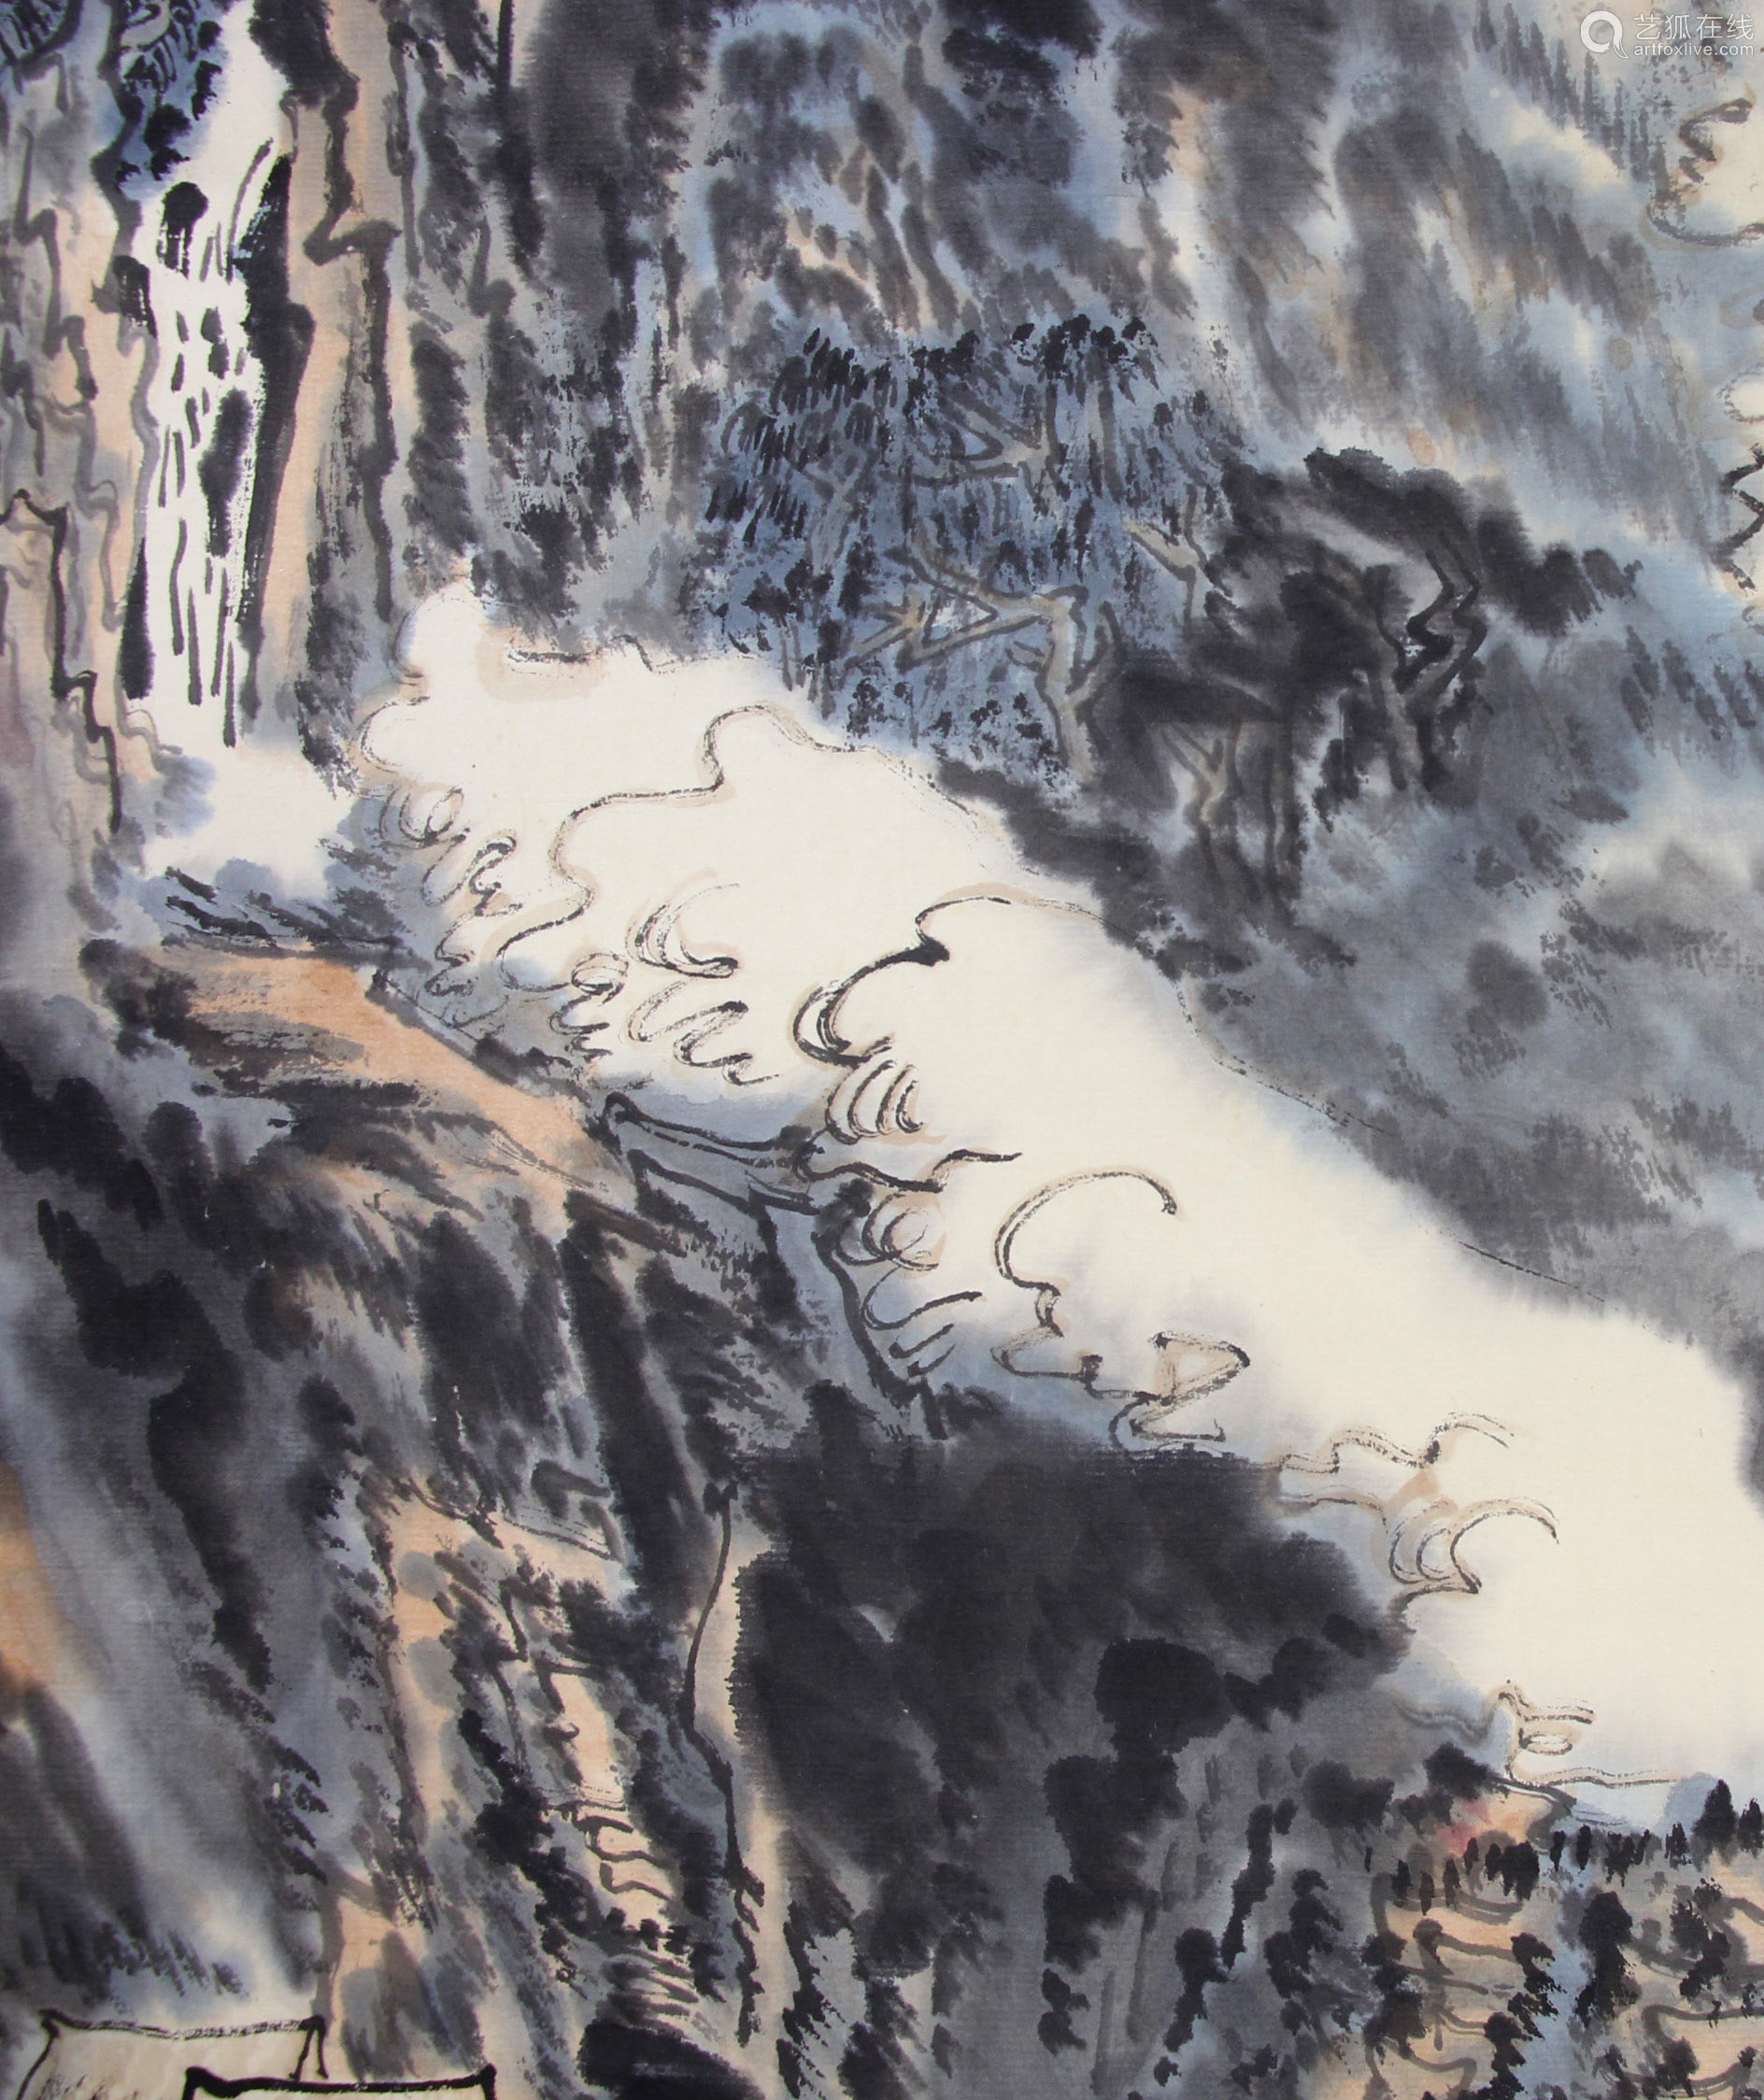 Chinese ink painting,
Lu Yanshao's Landscape Paintings